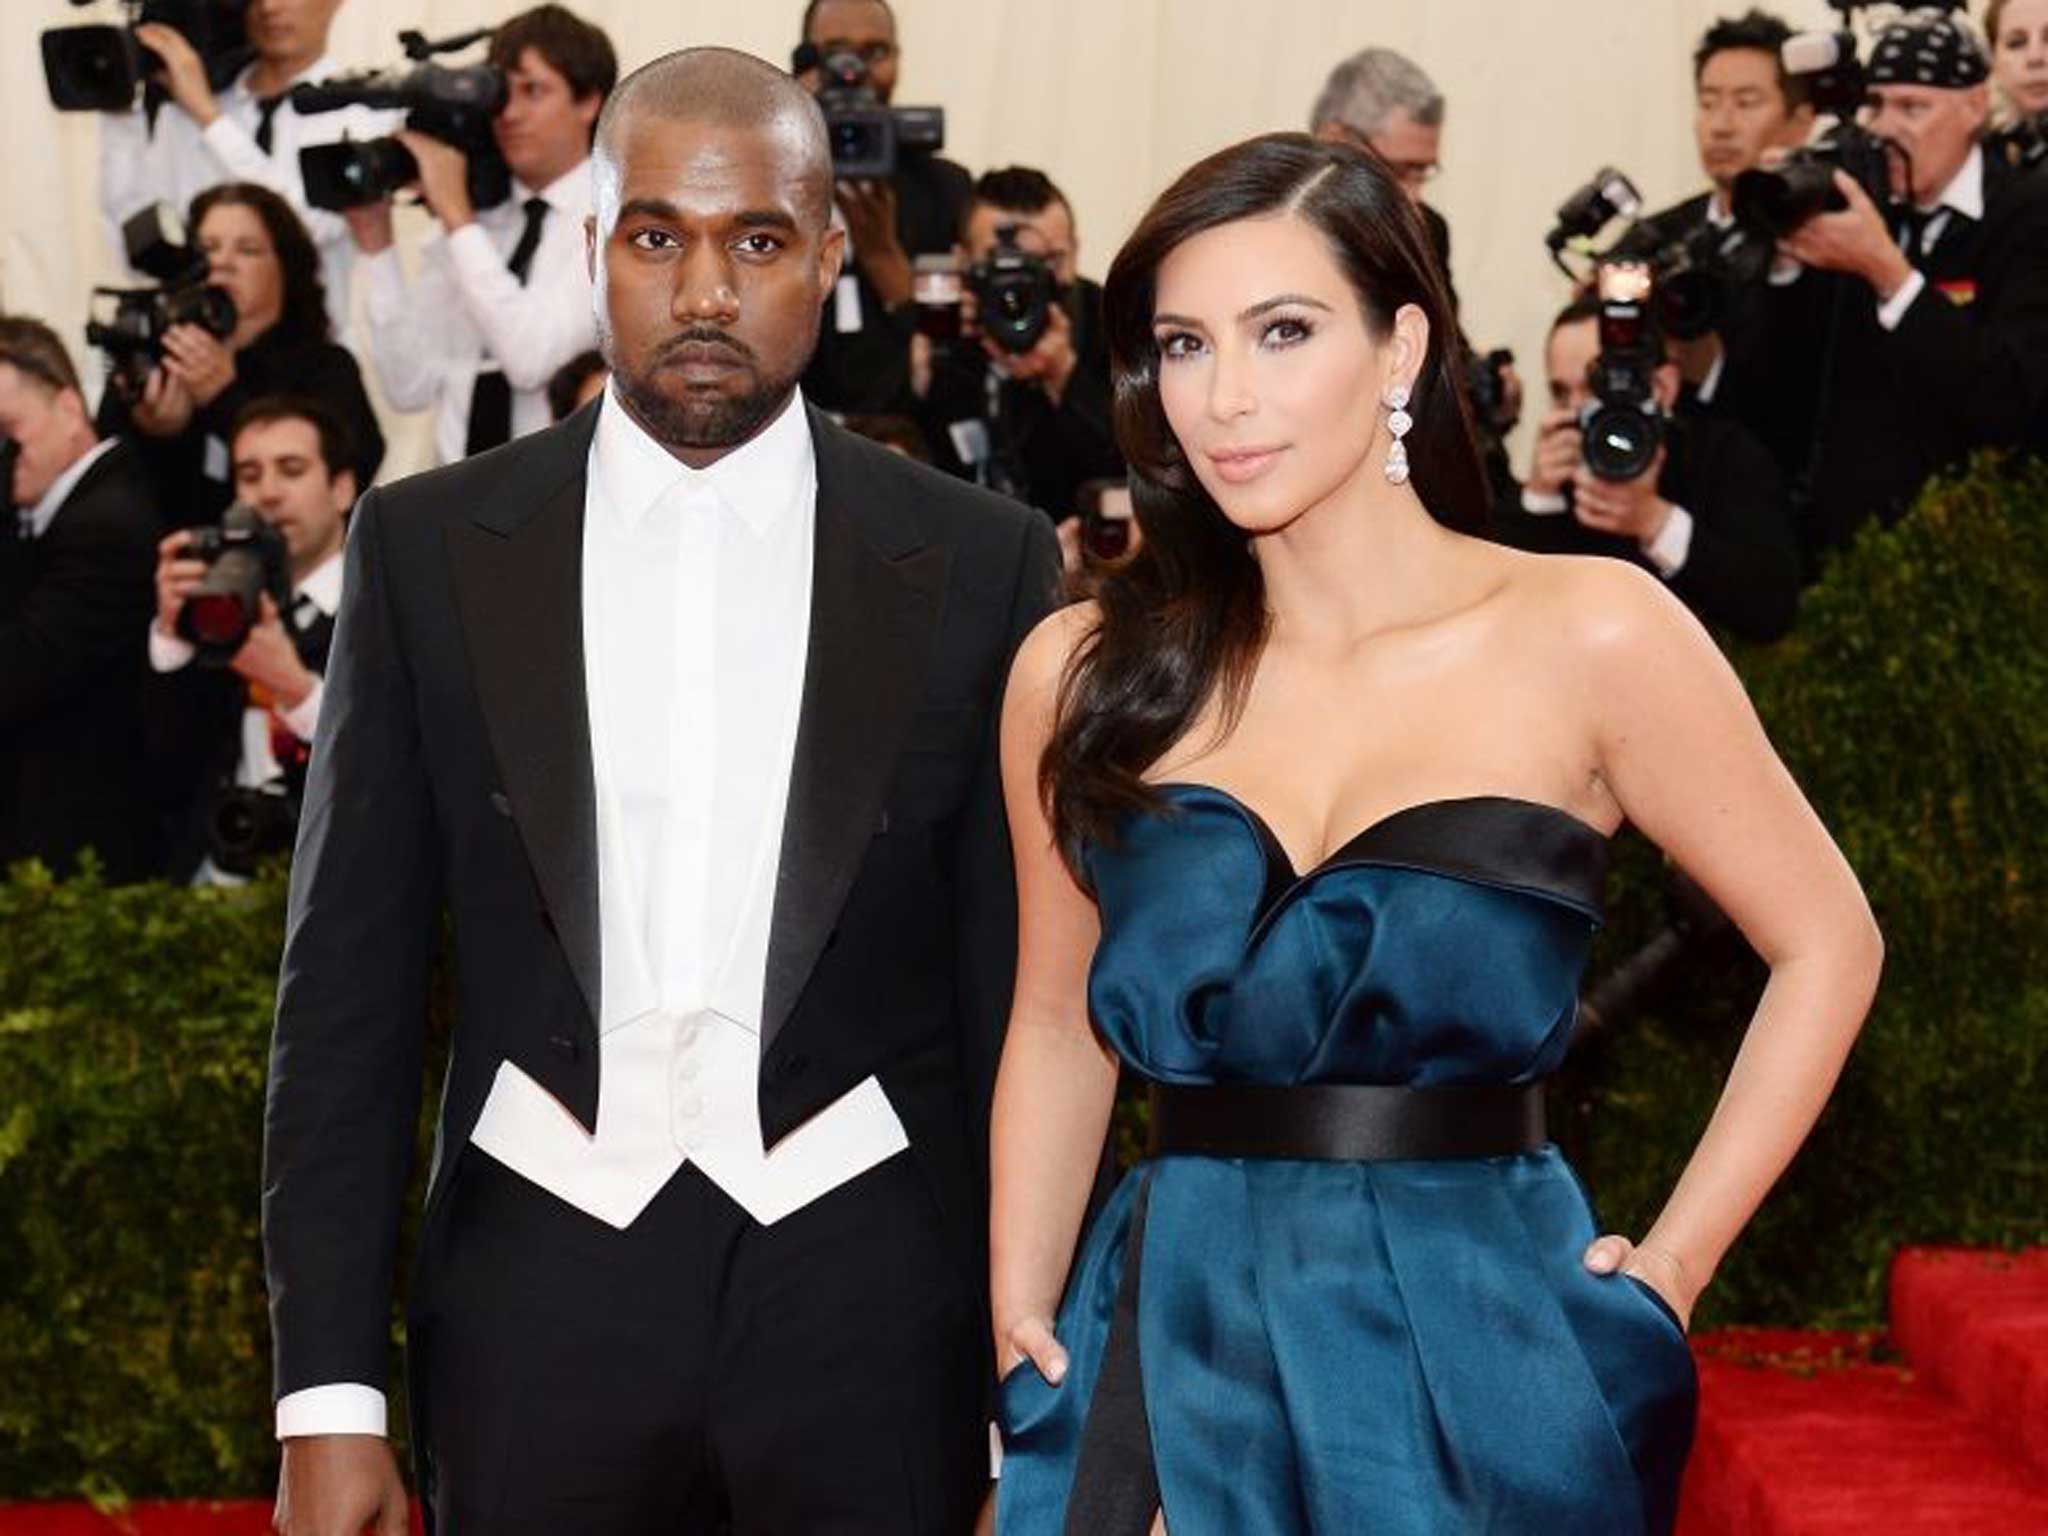 Kim Kardashian and Kanye West at the Met Ball this year